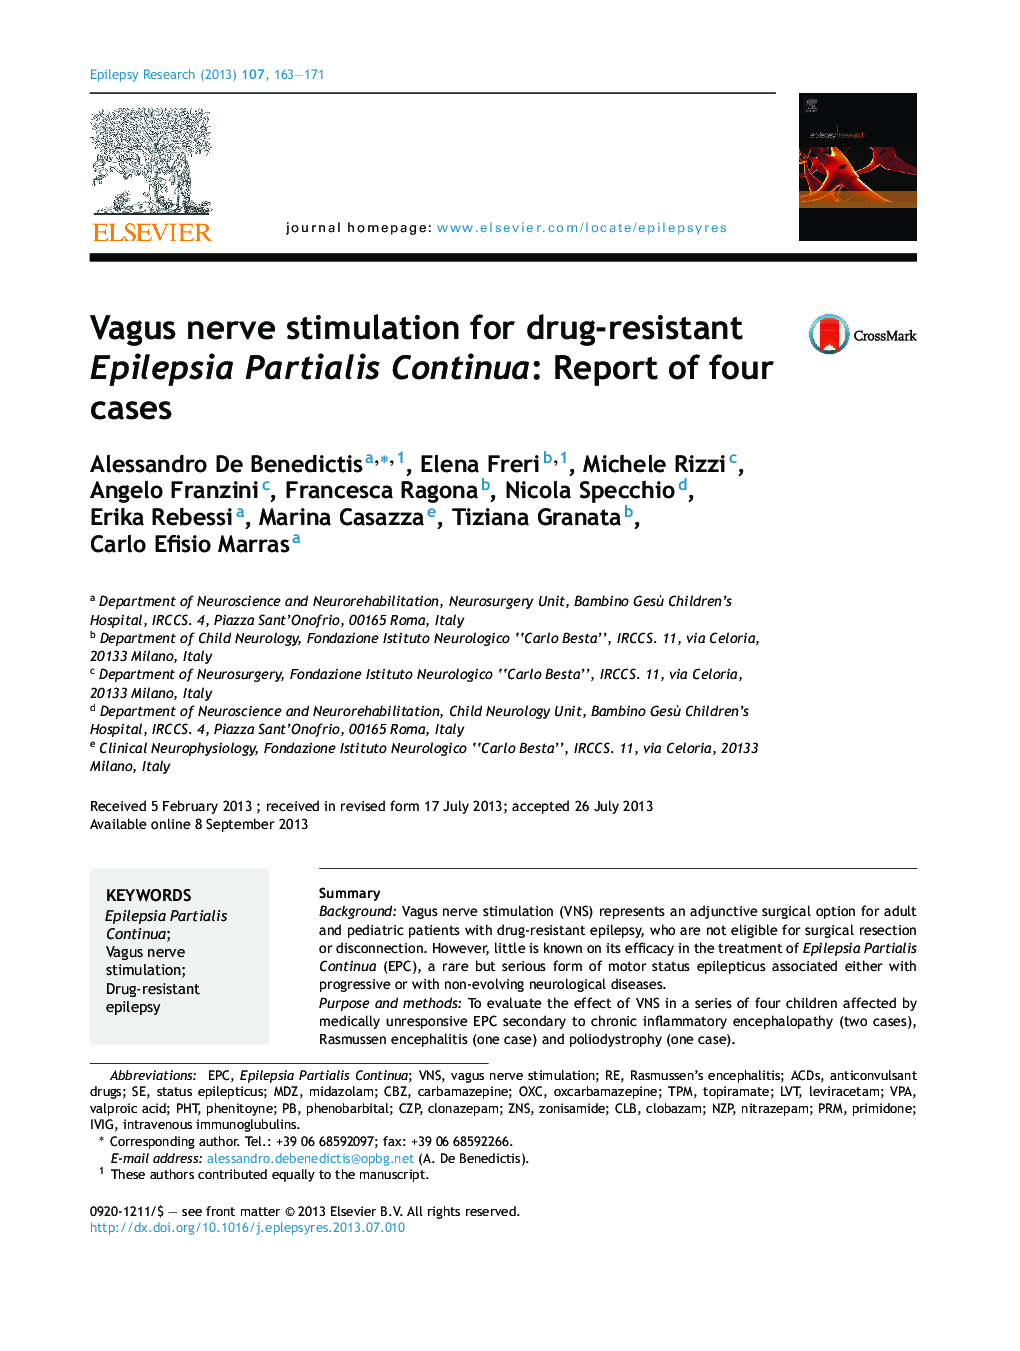 Vagus nerve stimulation for drug-resistant Epilepsia Partialis Continua: Report of four cases